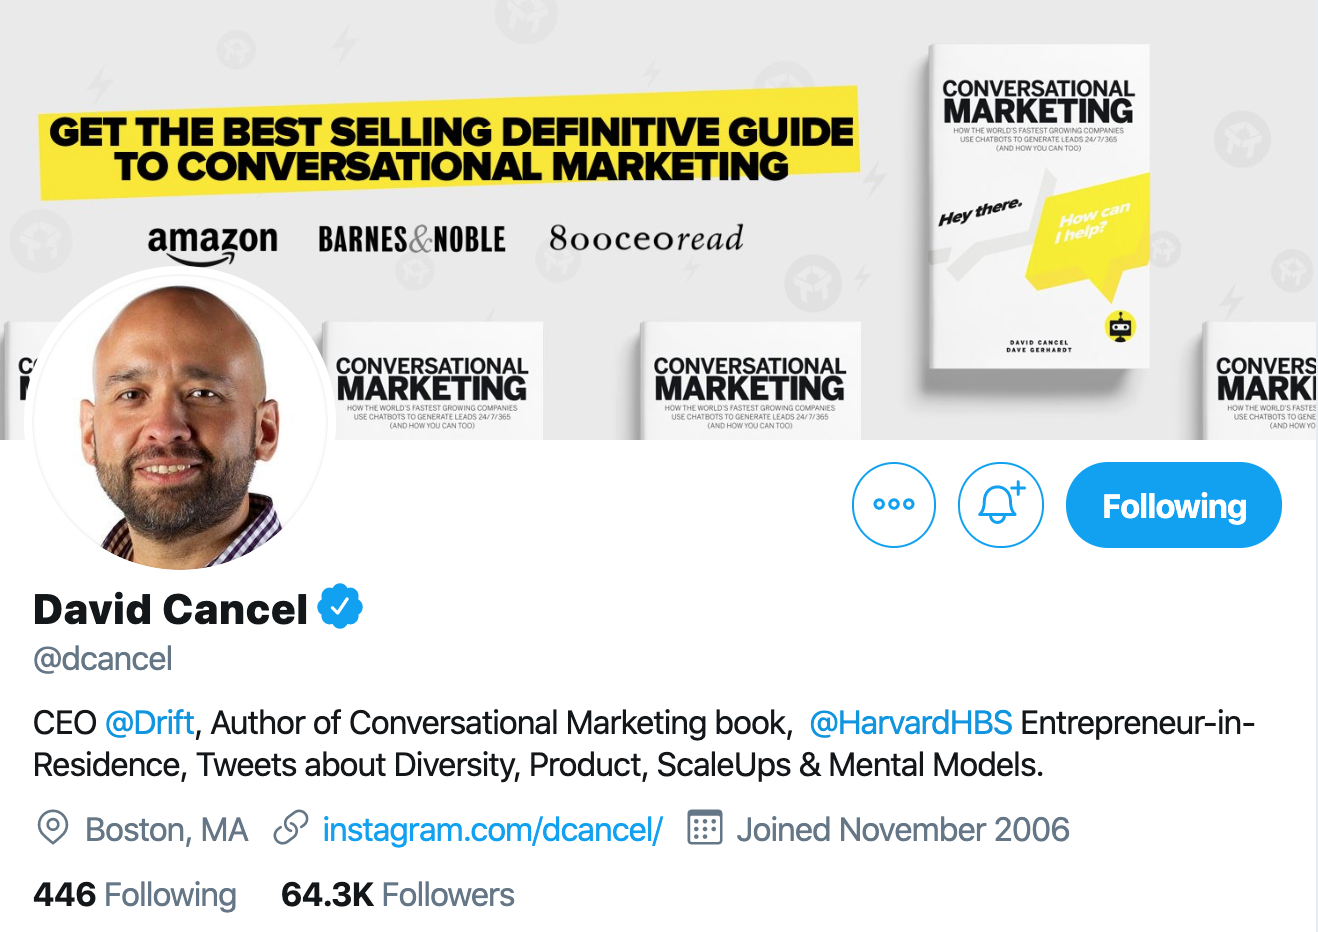 David Cancel. Marketer to follow on twitter